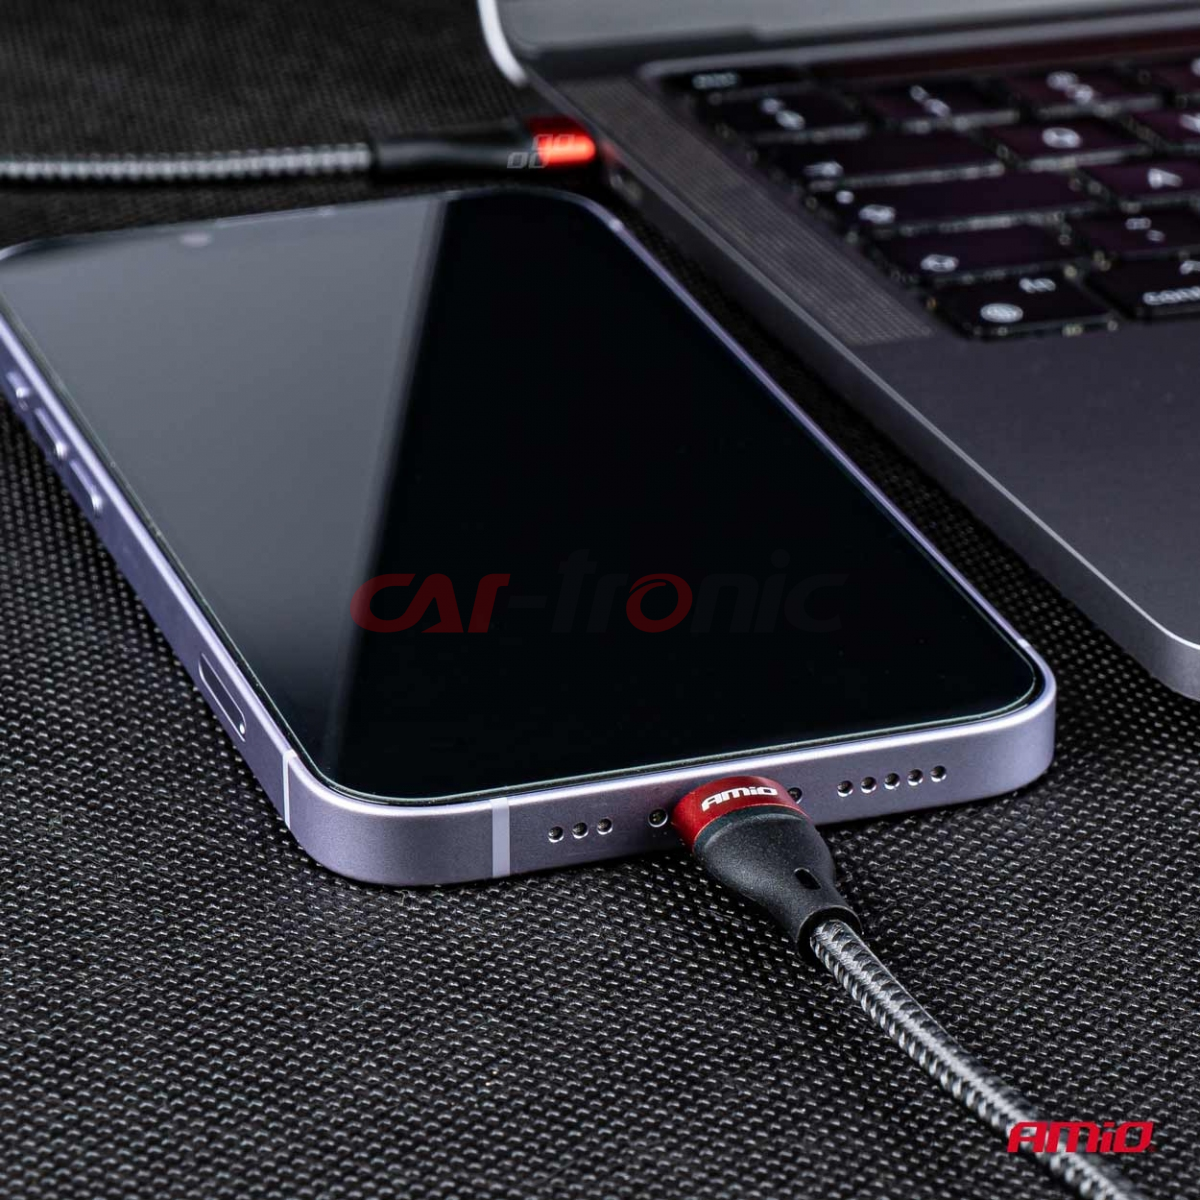 Kabel USB-C iphone Lightning 100 cm FullLINK UC-17 AMIO-02929